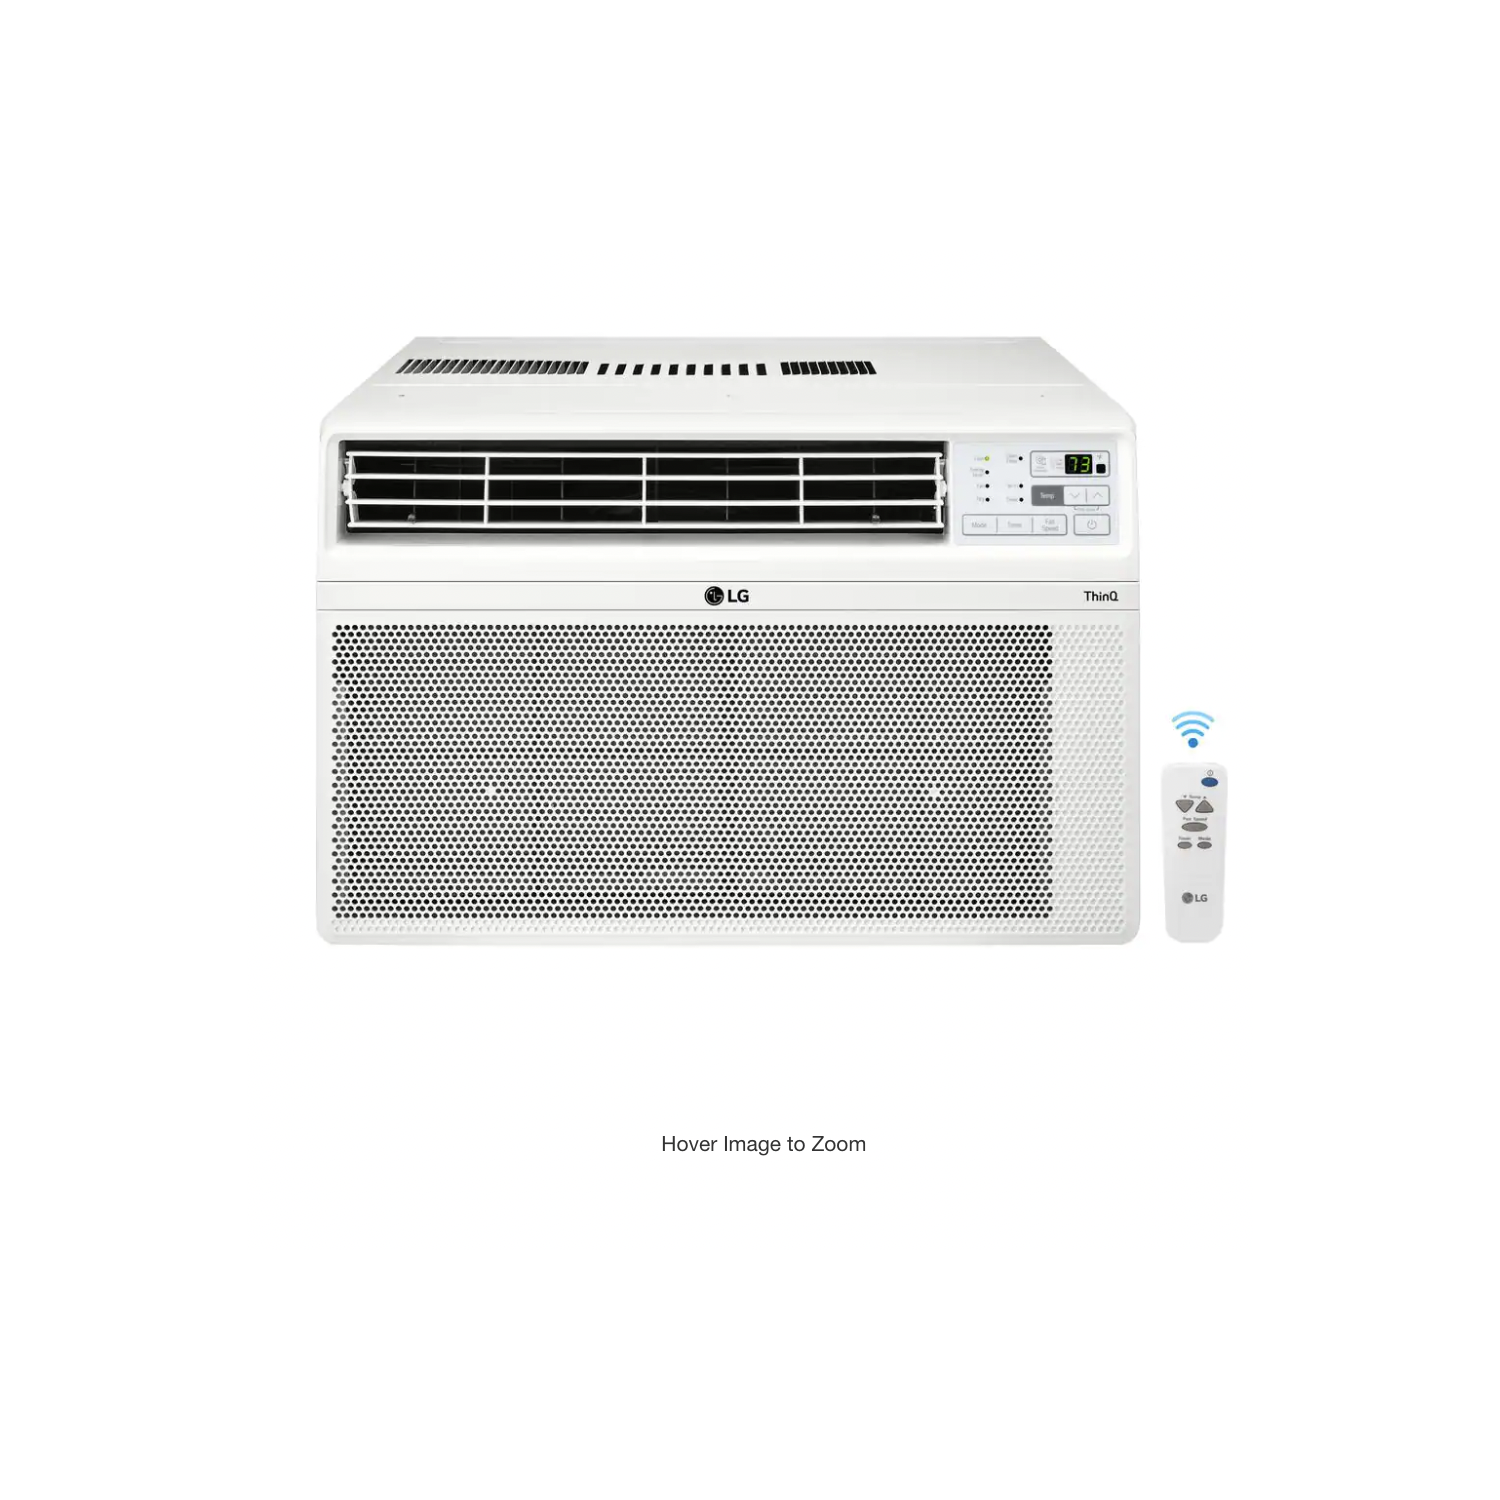 LG 12,000 BTU Window Smart Air Conditioner Cools 550 Sq. Ft. (22' x 25' Room Size) Ultra Quiet, Energy Star, Works w/ ThinQ, Amazon Alexa, Hey Google and Remote, 115V (LW1222ERSM)